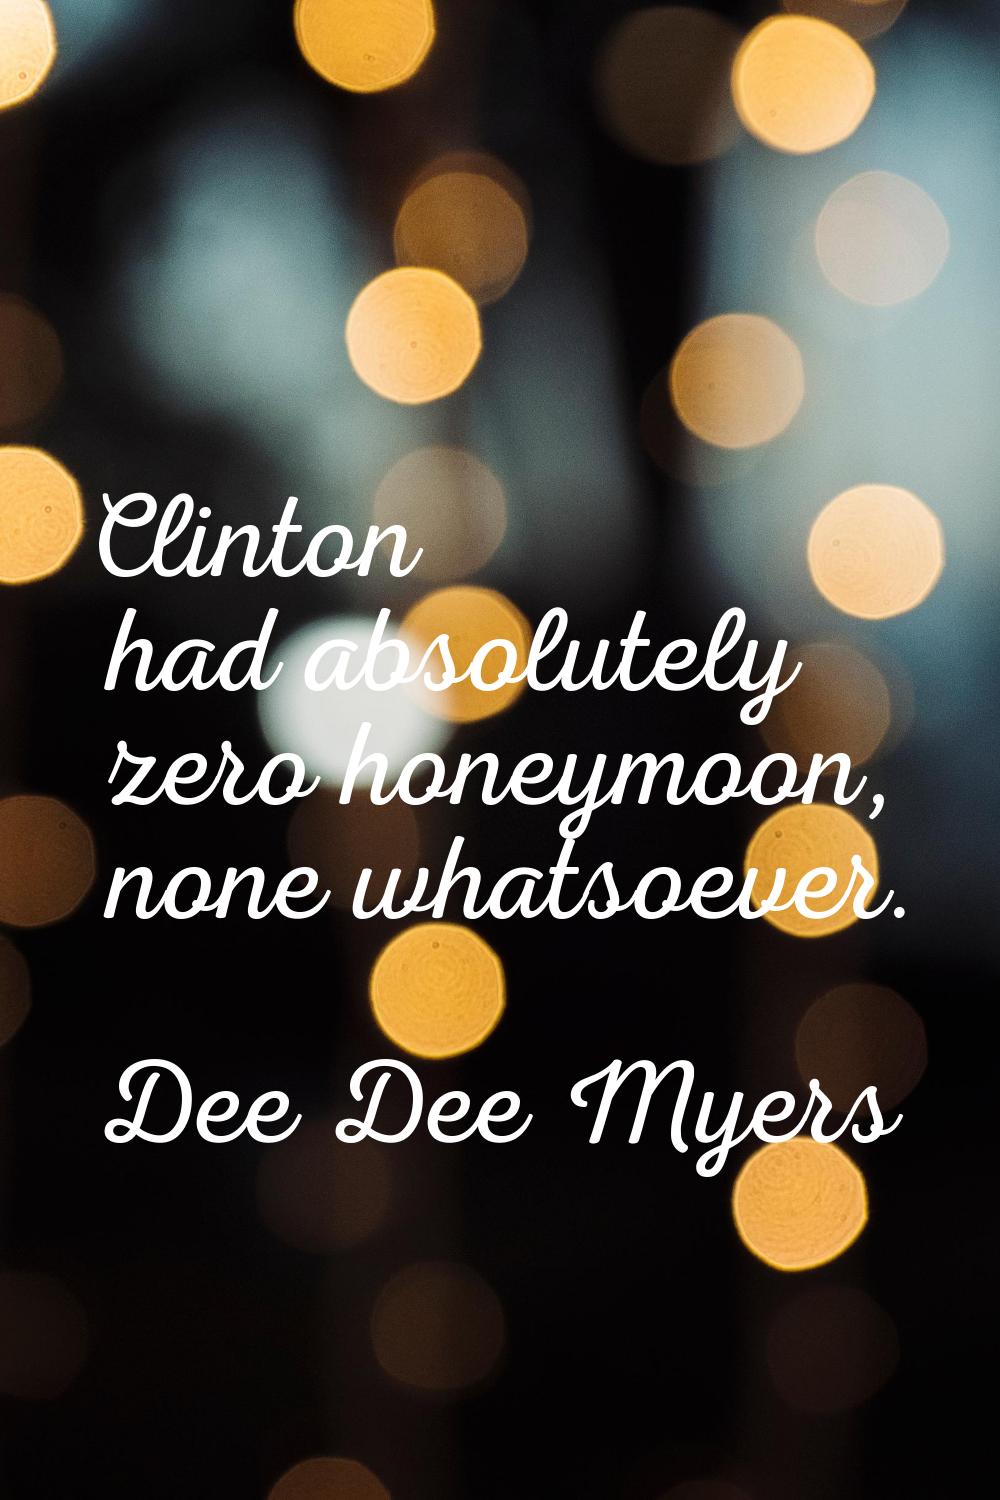 Clinton had absolutely zero honeymoon, none whatsoever.